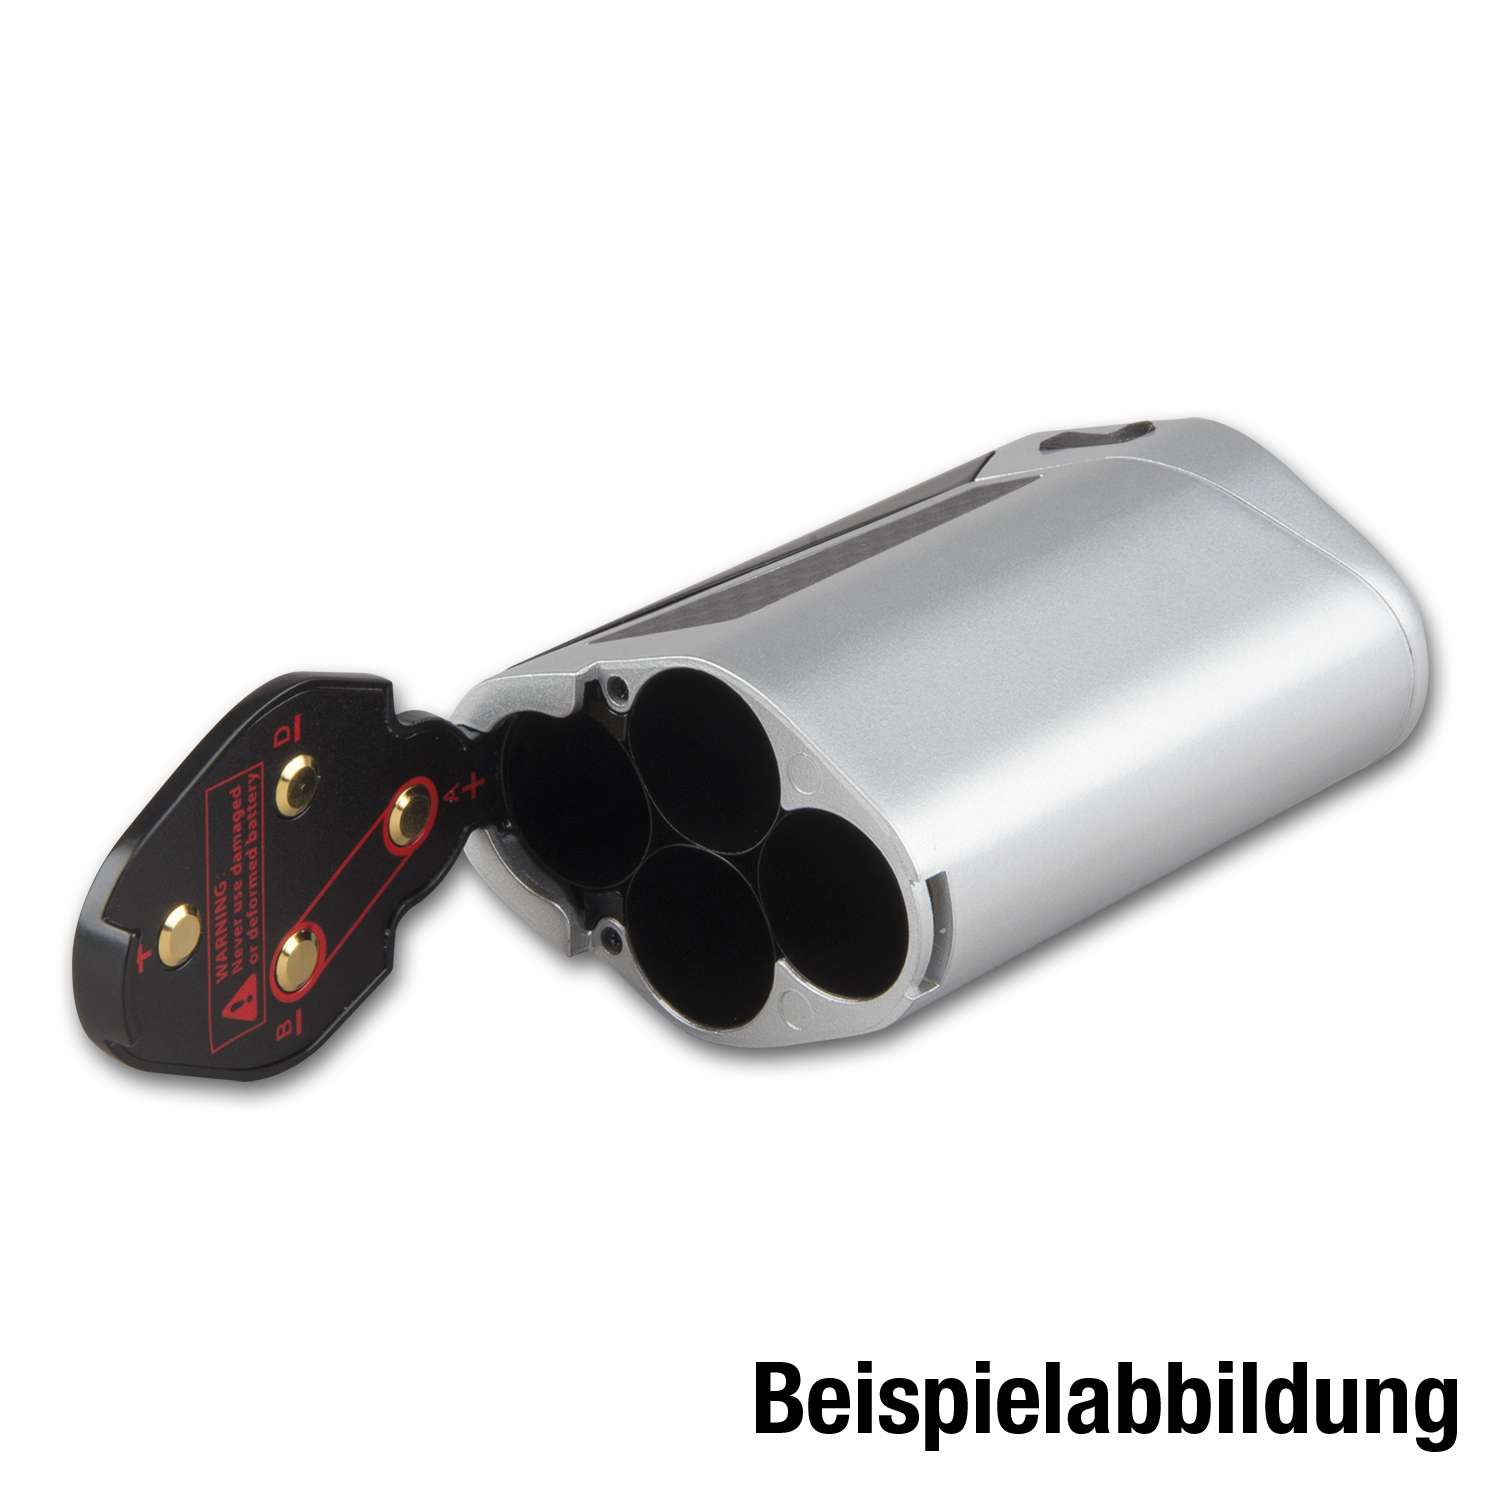 E-Zigarette Akkuträger STEAMAX GX350 Set  schwarz / lila